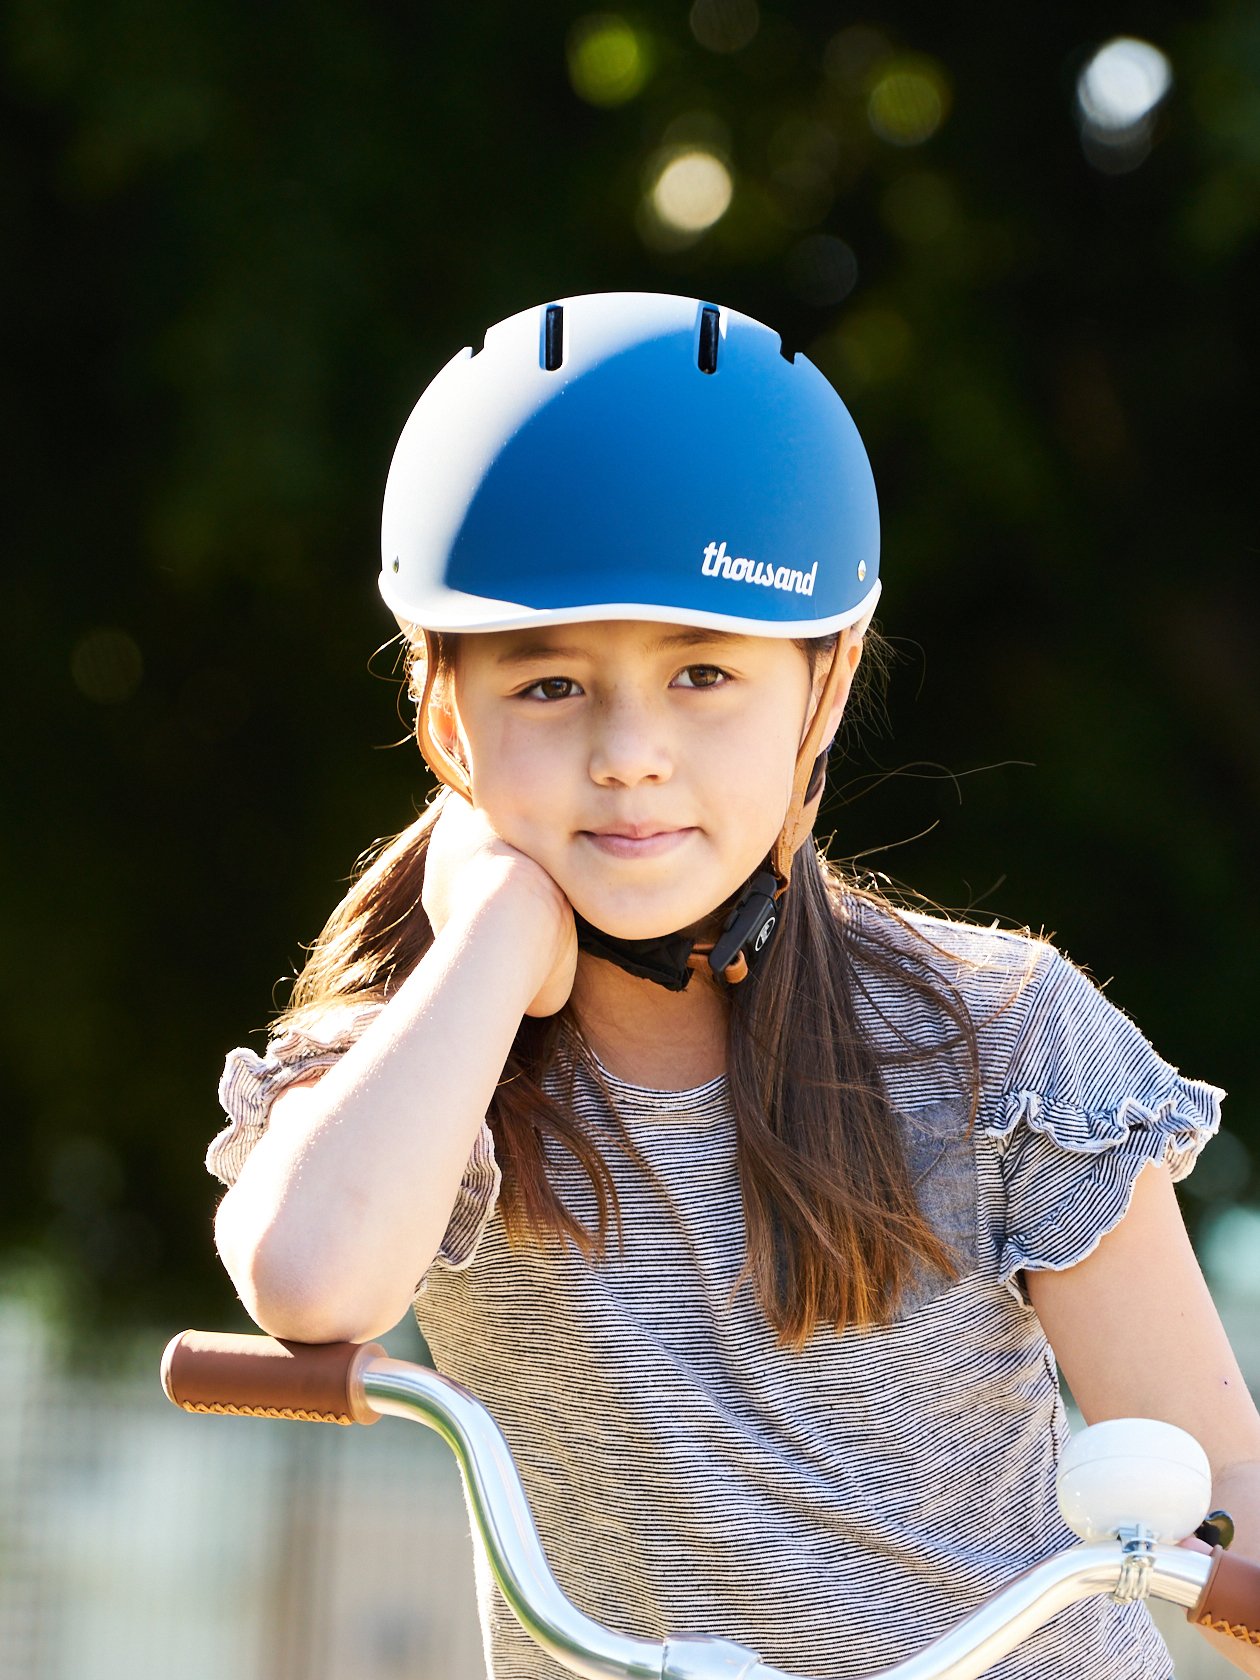 Thousand Jr Kids Helmet, Blazing Blue